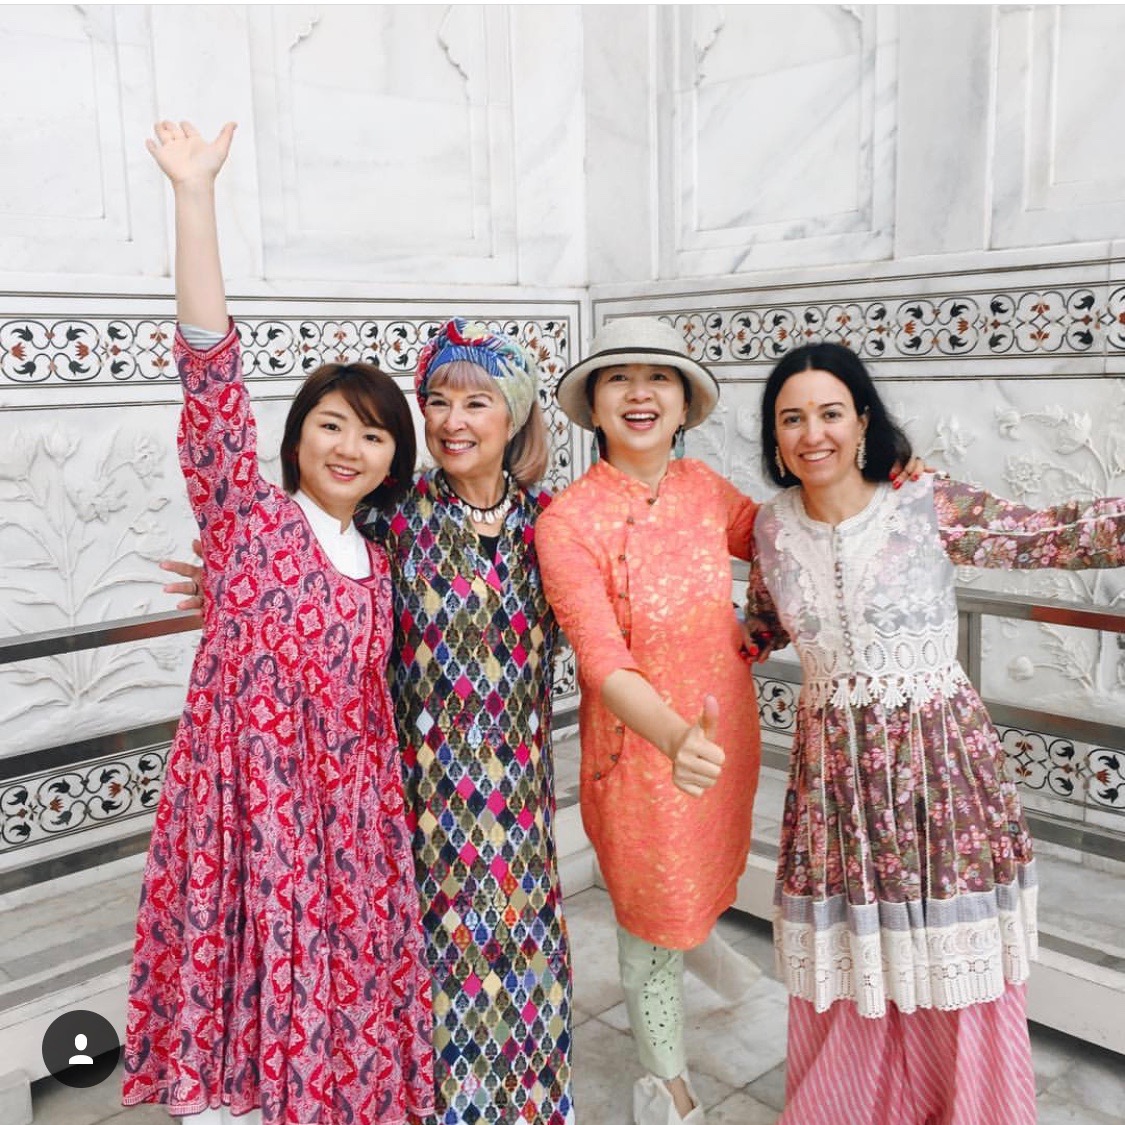 Fashion at the Taj Mahal